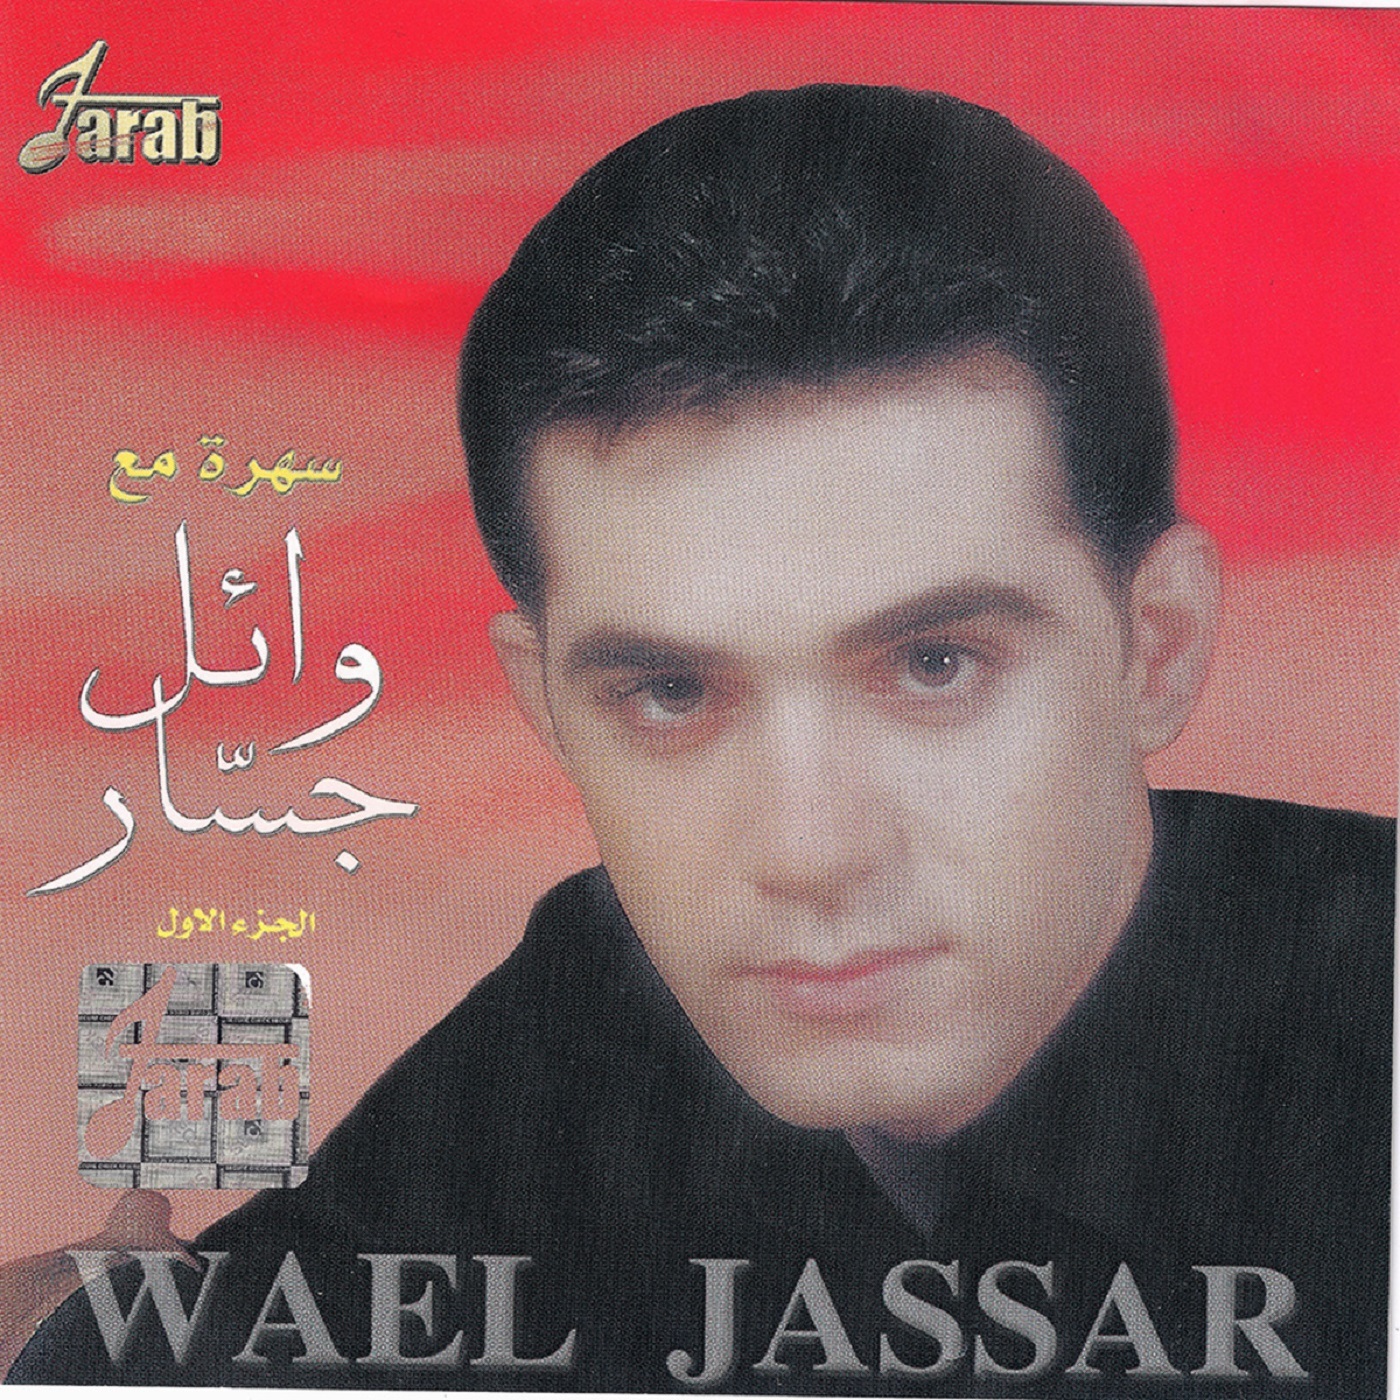 Wael Jassar Live P1 EP    1